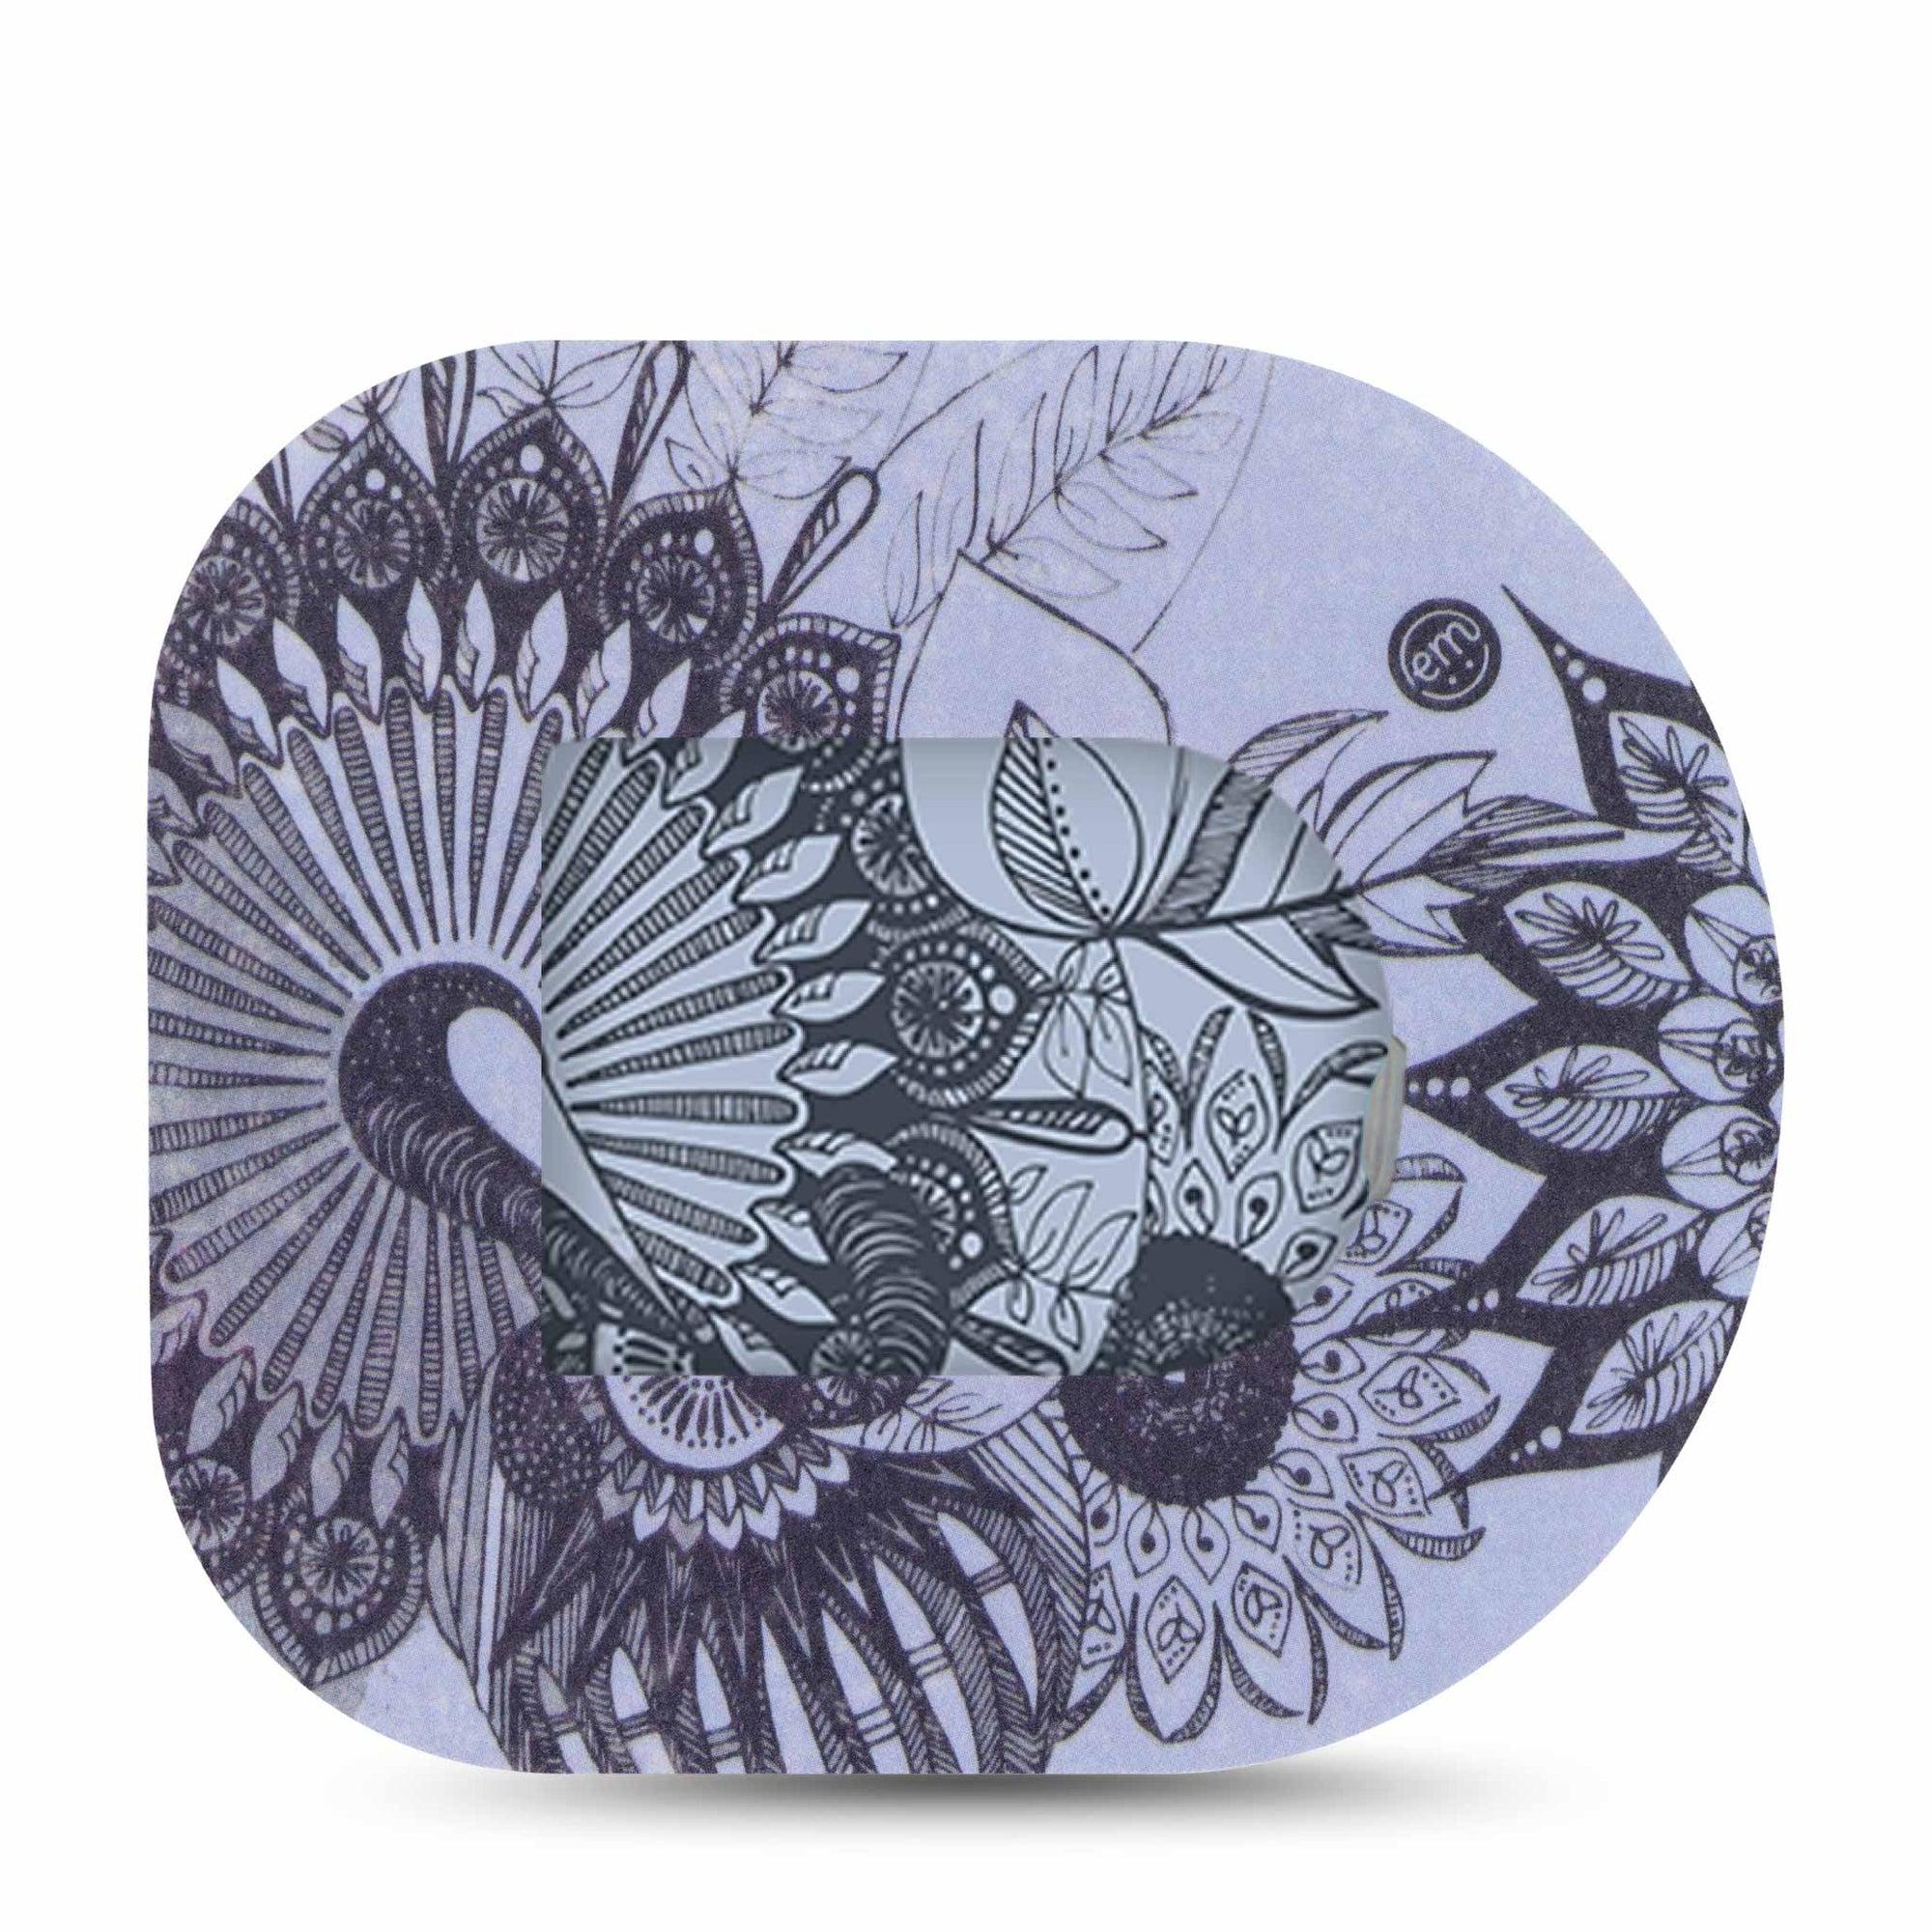 Dani Pod Center Sticker with Matching Omnipod Overlay Tape Sunflower Gray Scale Inspired Vinyl Device Pump Decorative Design